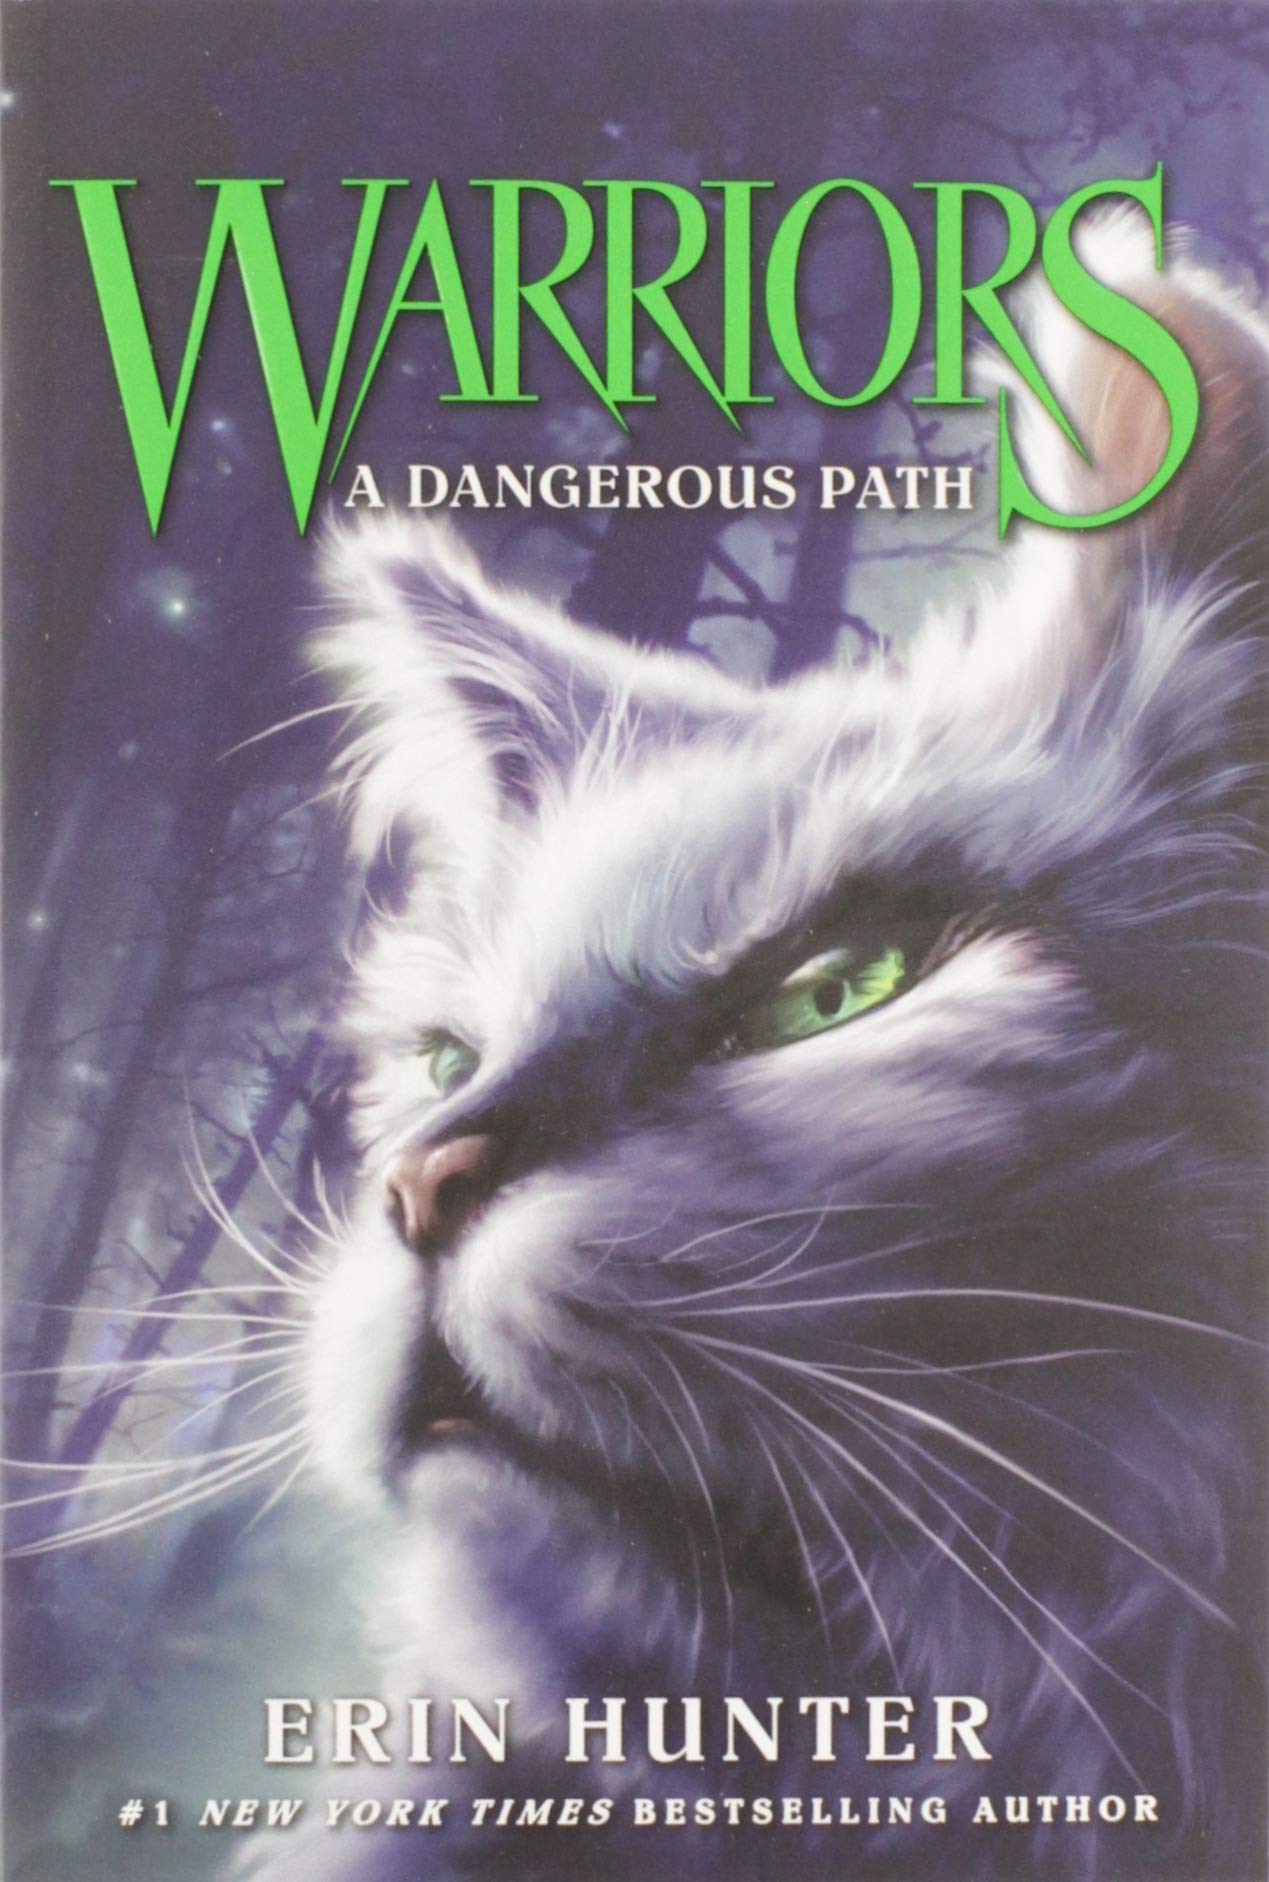 Warriors #4: Rising Storm - (Warriors: The Prophecies Begin) by Erin Hunter  (Paperback)